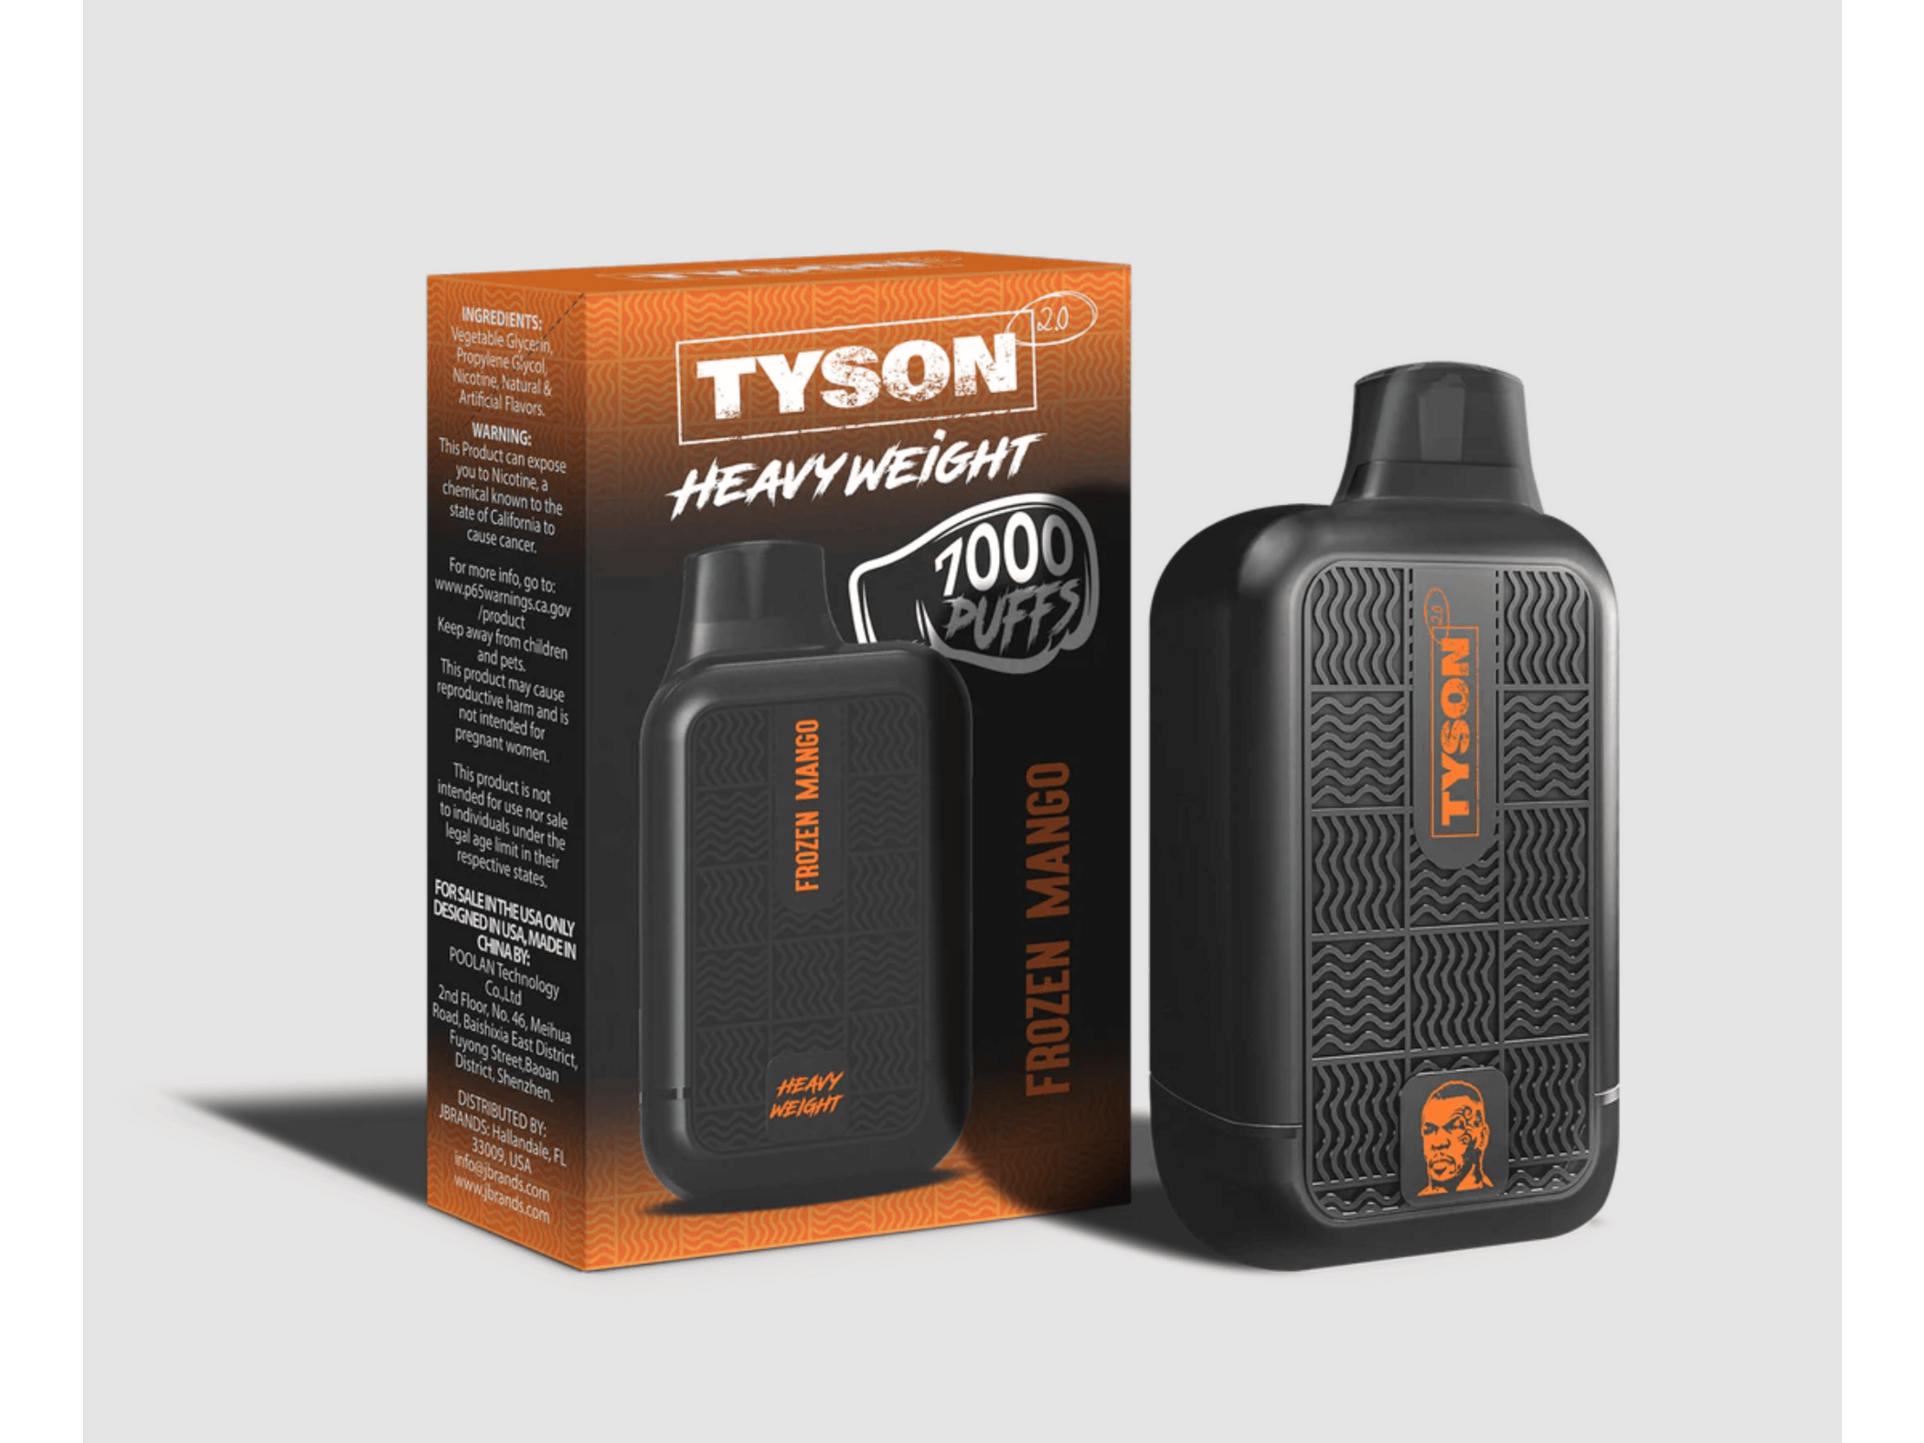 Tyson Heavyweight Frozen Mango flavored disposable vape device and box